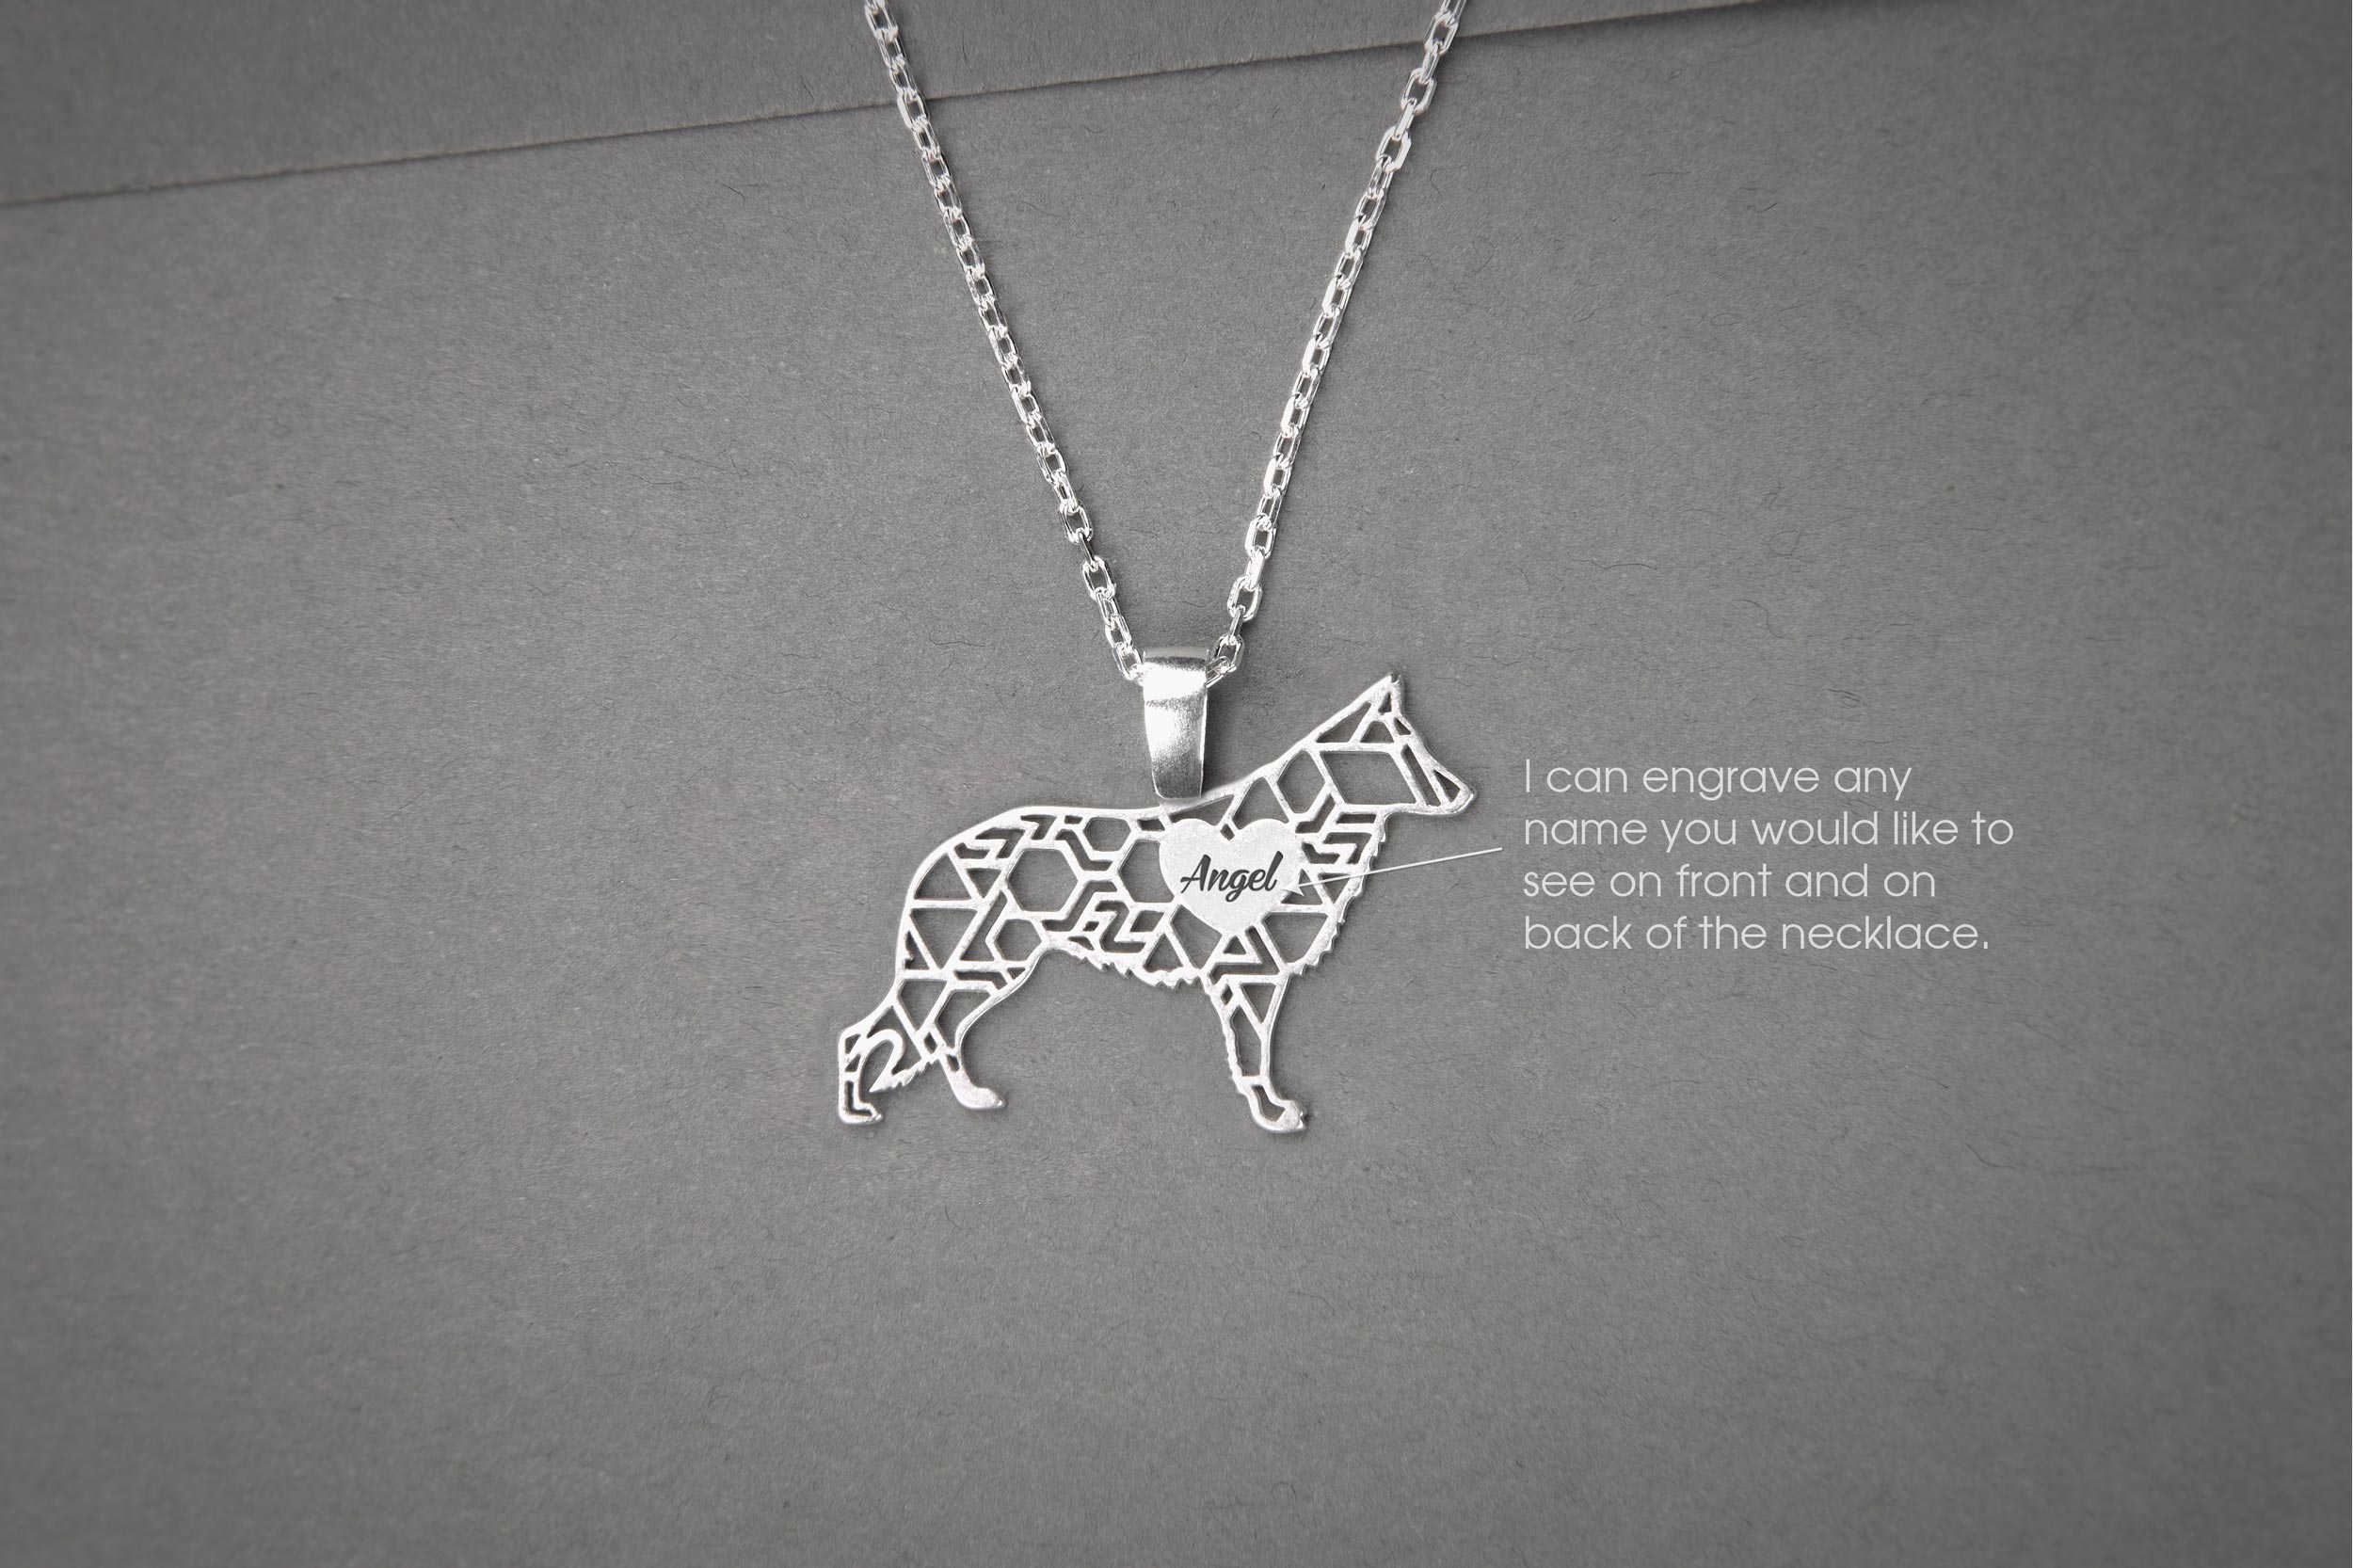 WEVENI Acrylic German Shepherd Dog Necklace Pendant Chain Choker Unique  Animal Jewelry For Women Girls Pet Lovers Gift Wholesale From Jutie, $21.83  | DHgate.Com